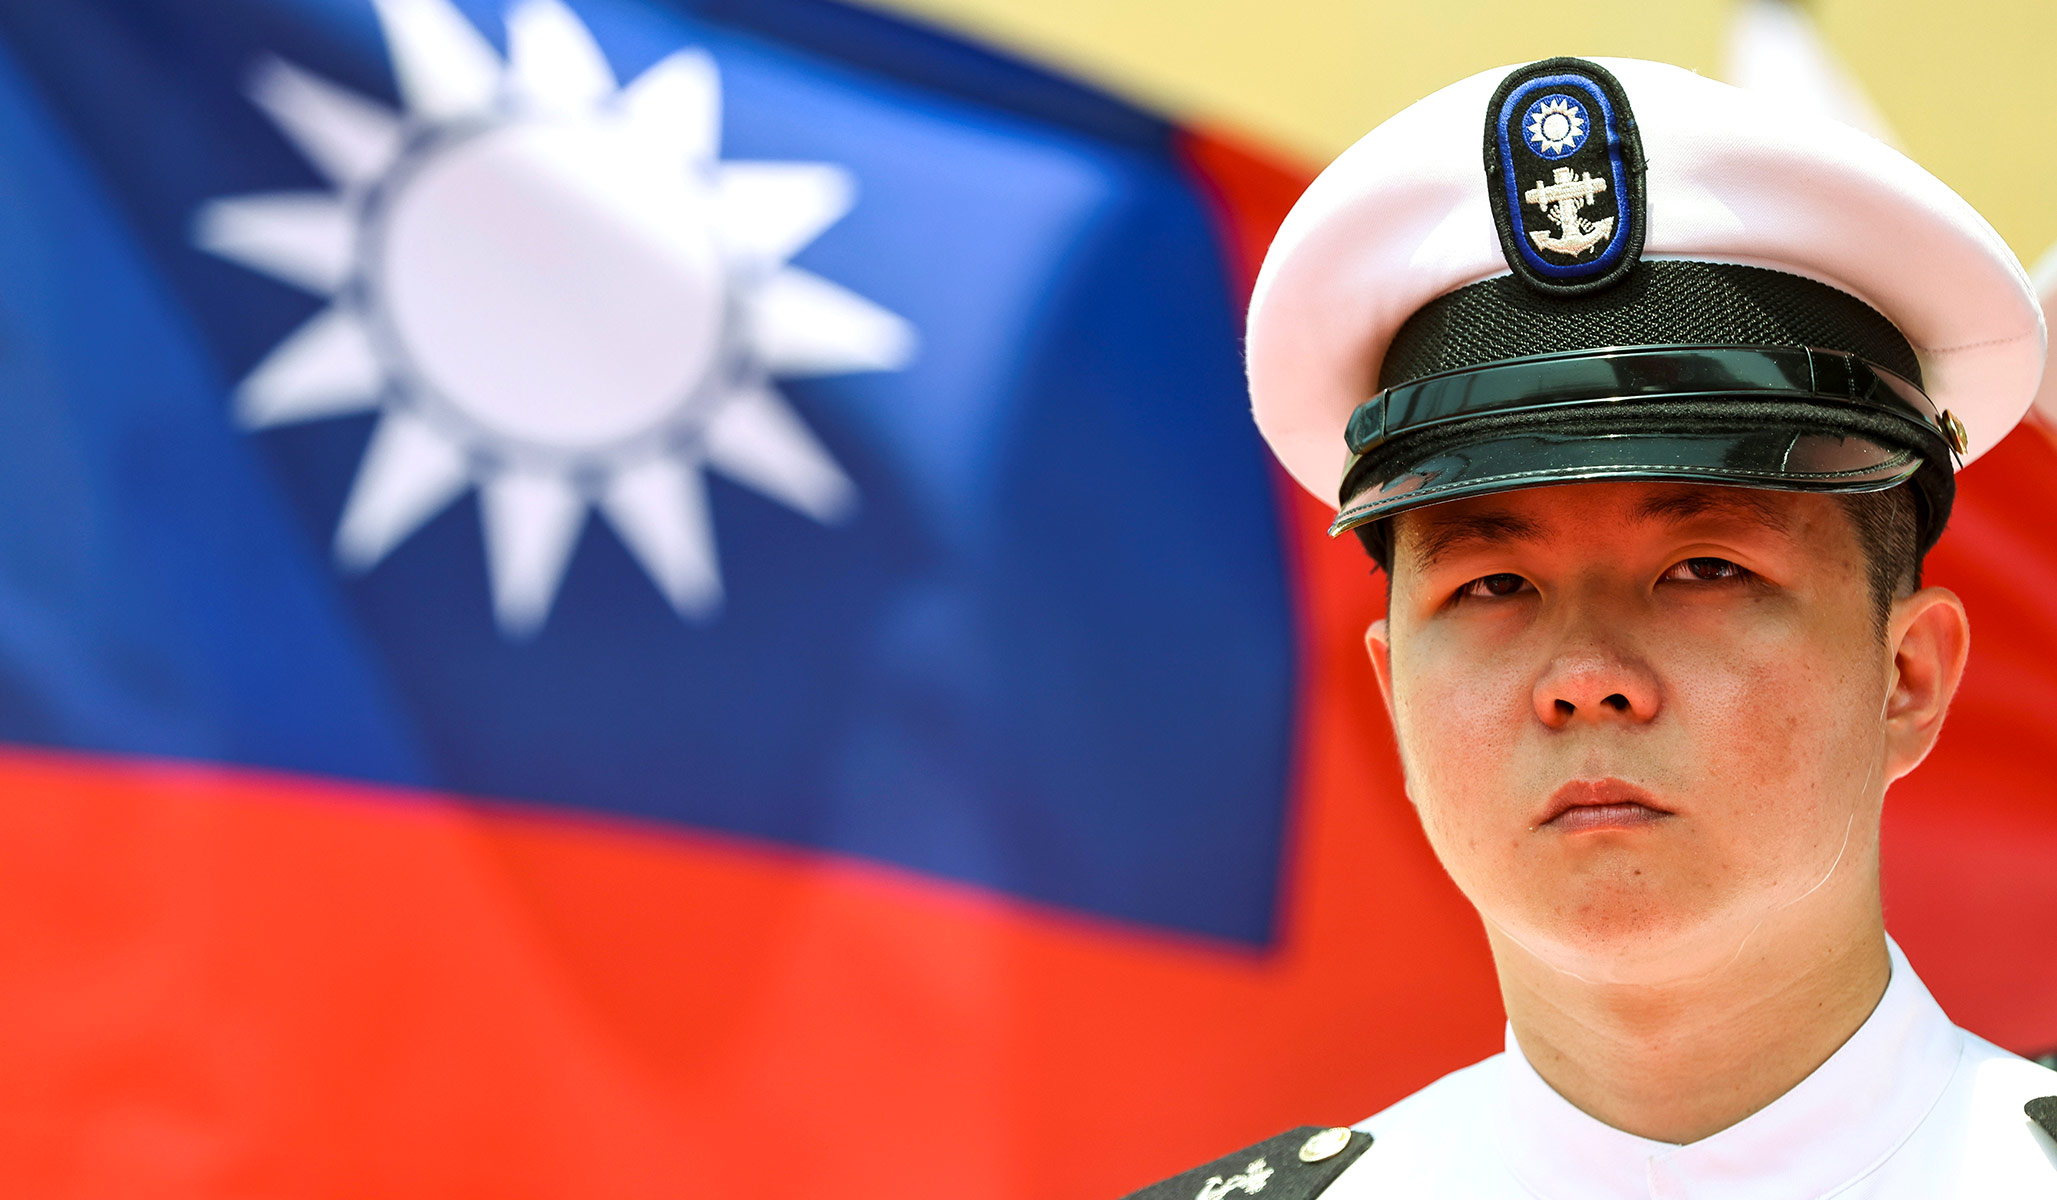 Taiwan navy officer